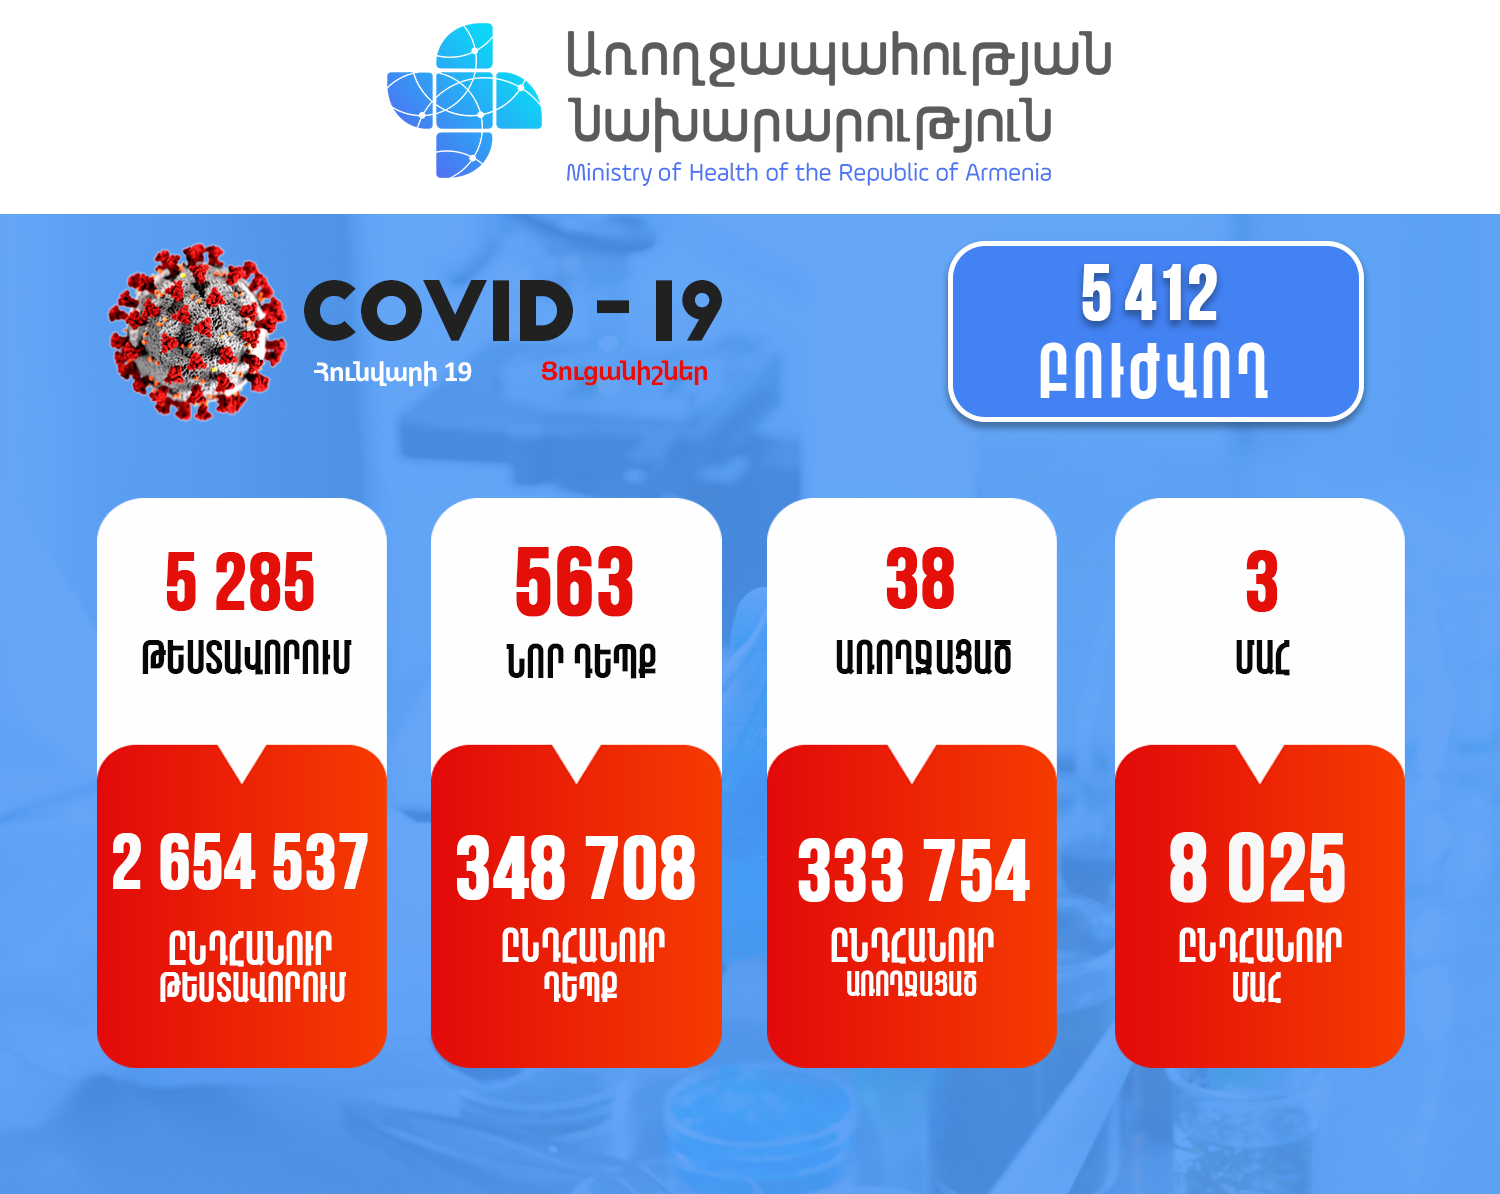 563 New COVID Cases